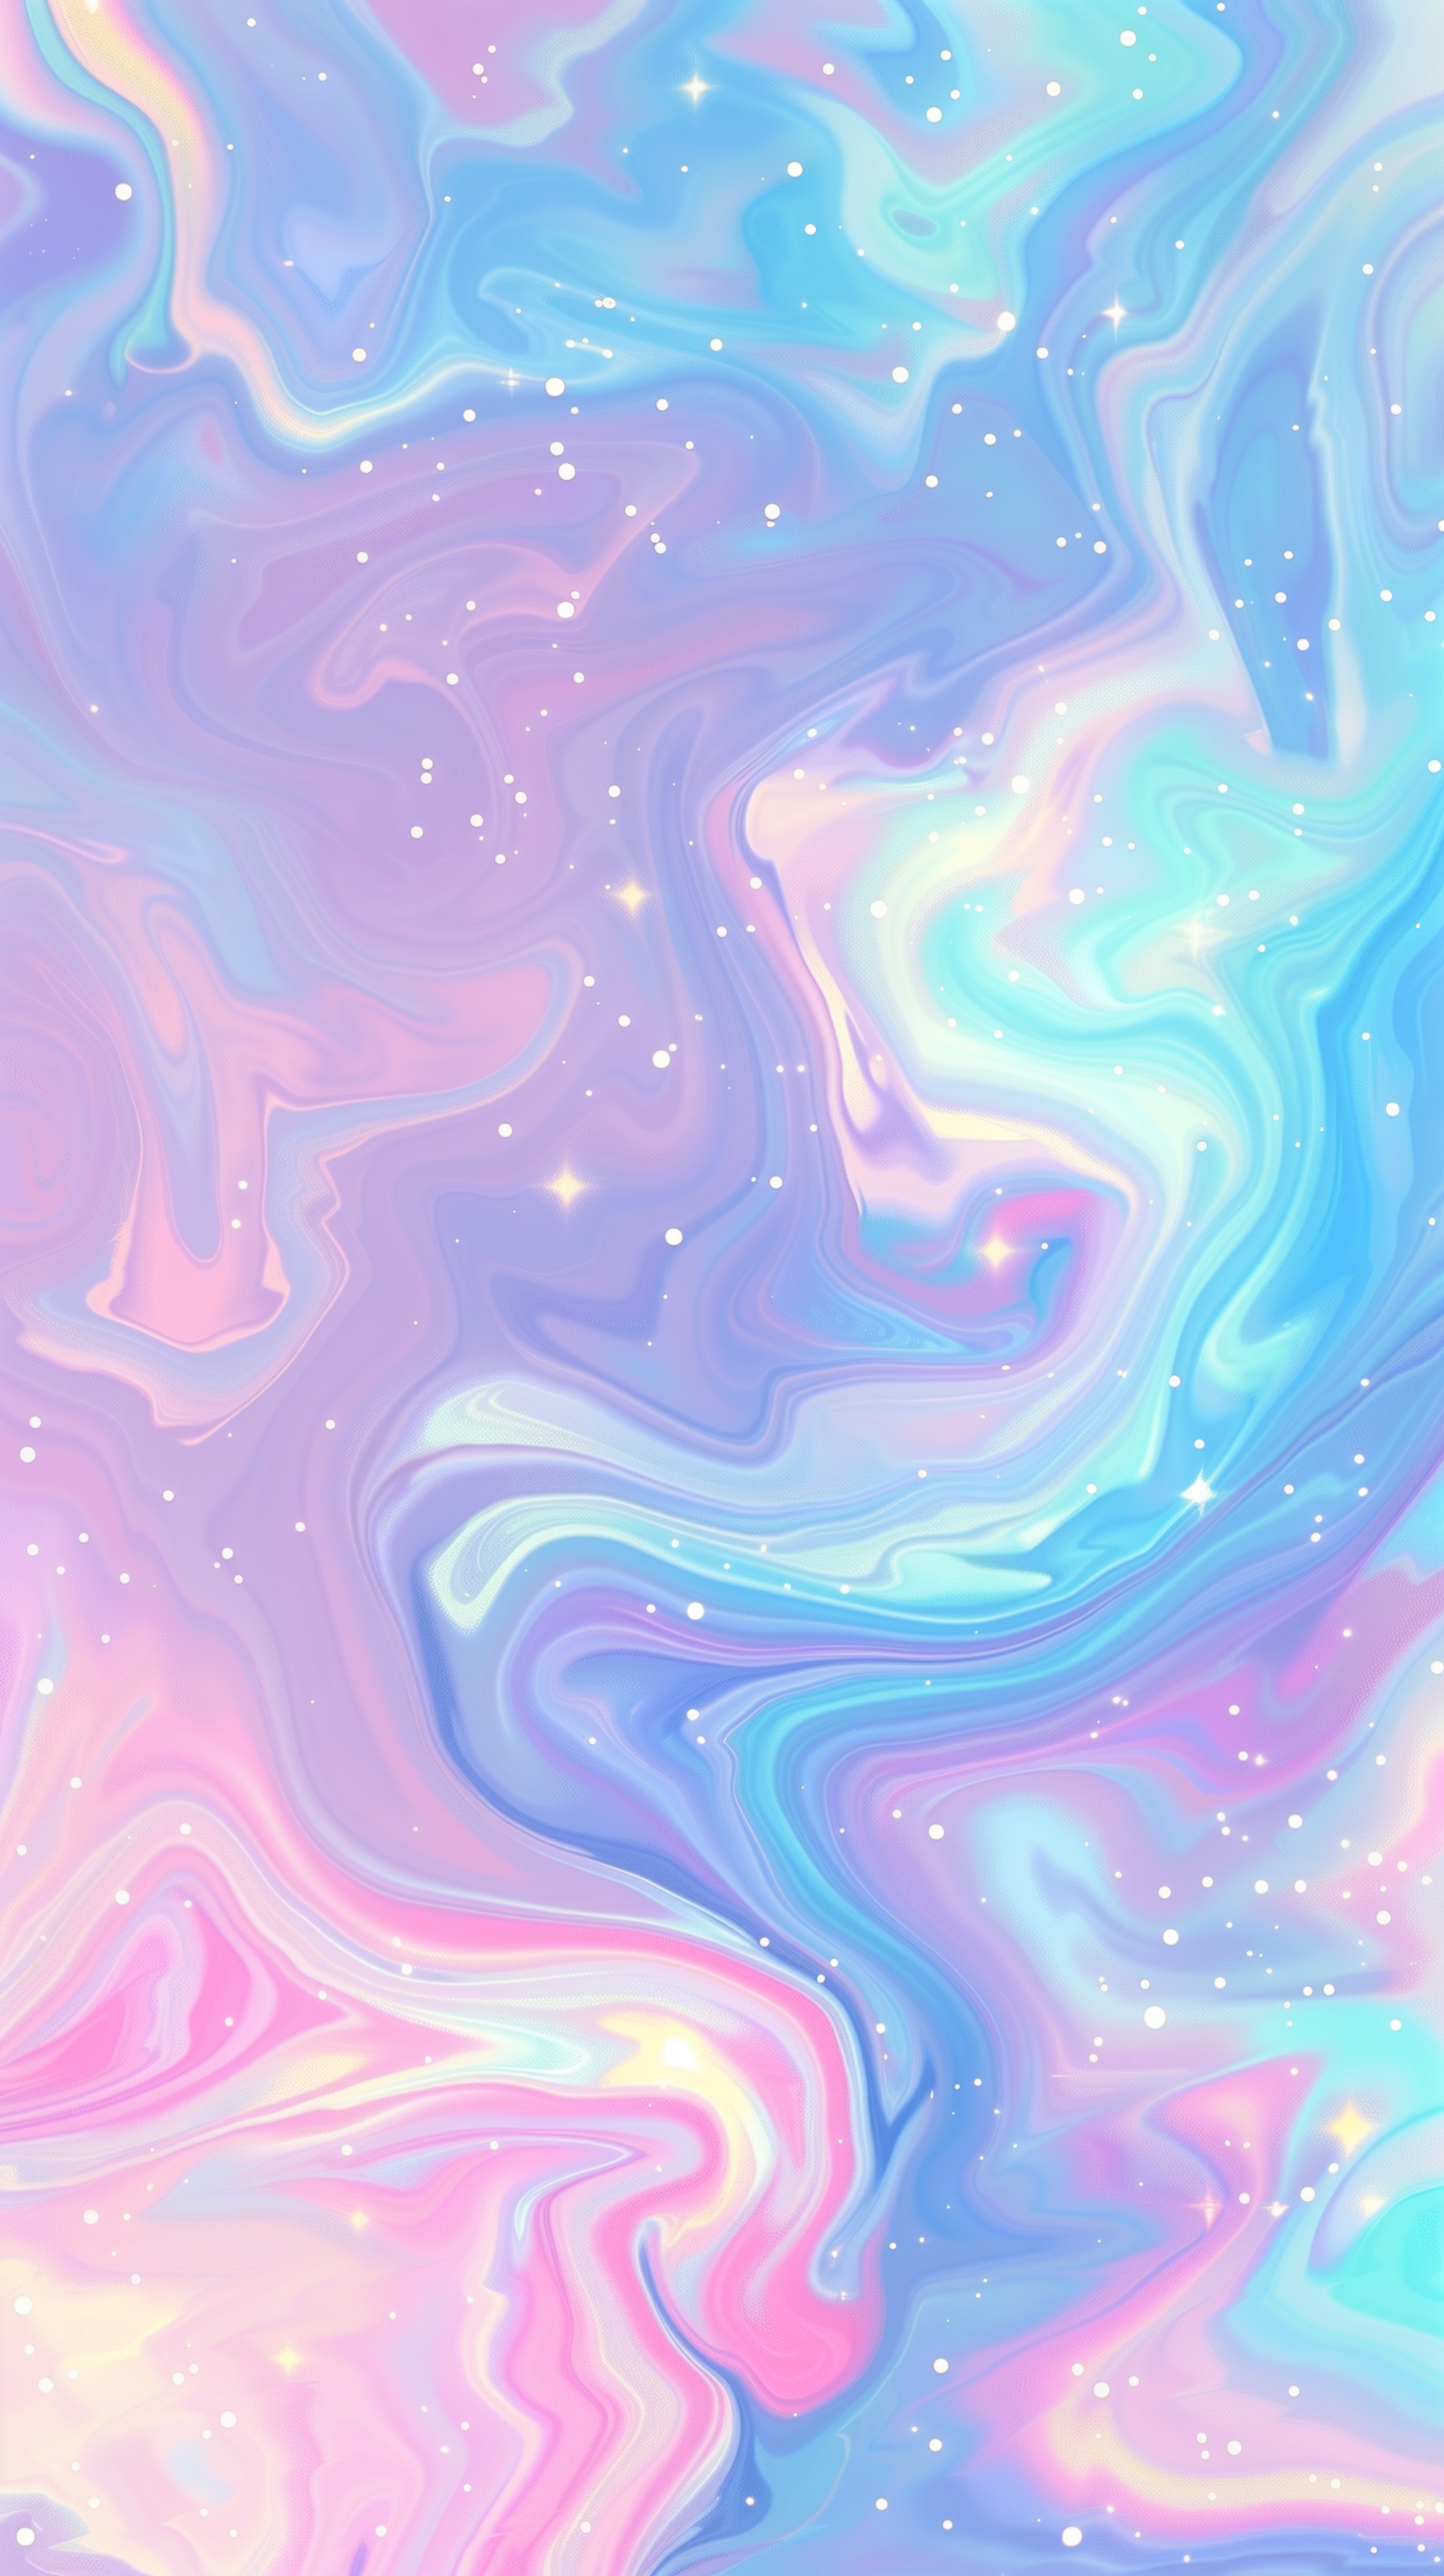 Colorful Swirls of Pink and Blue Дэлгэцийн зураг[68dfb80c26194abb9aca]